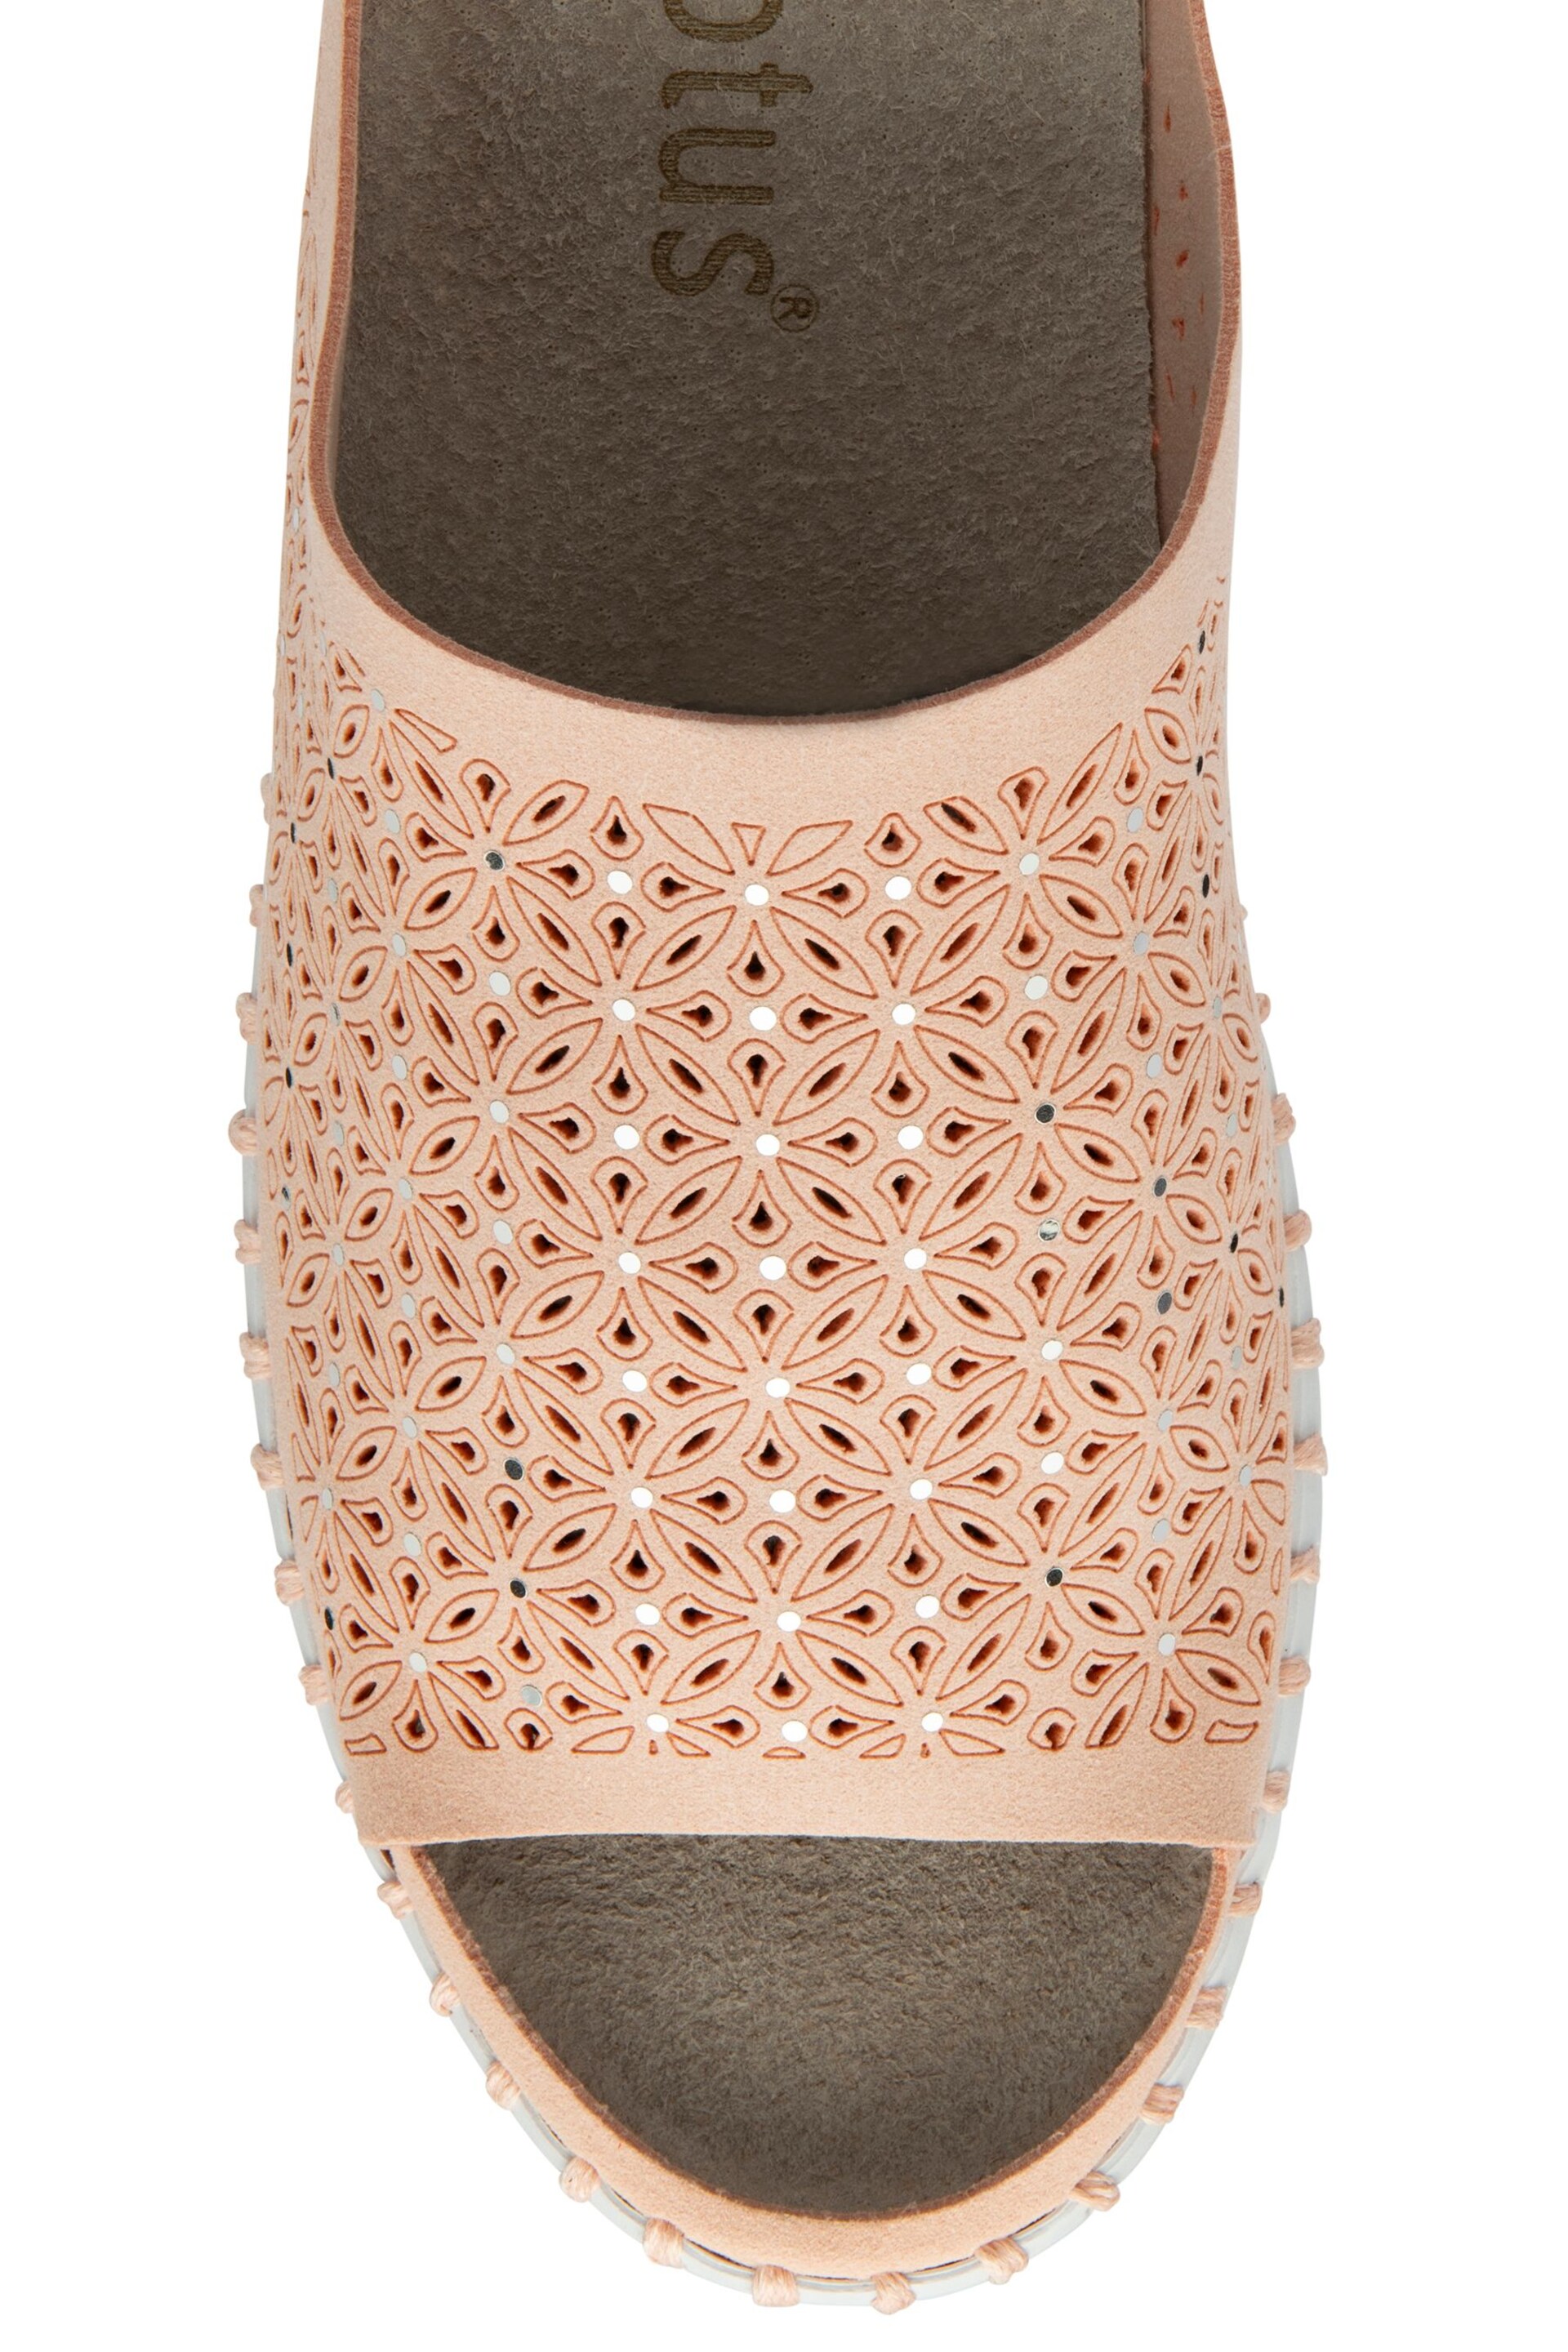 Lotus Pink Flat Mule Sandals - Image 4 of 4